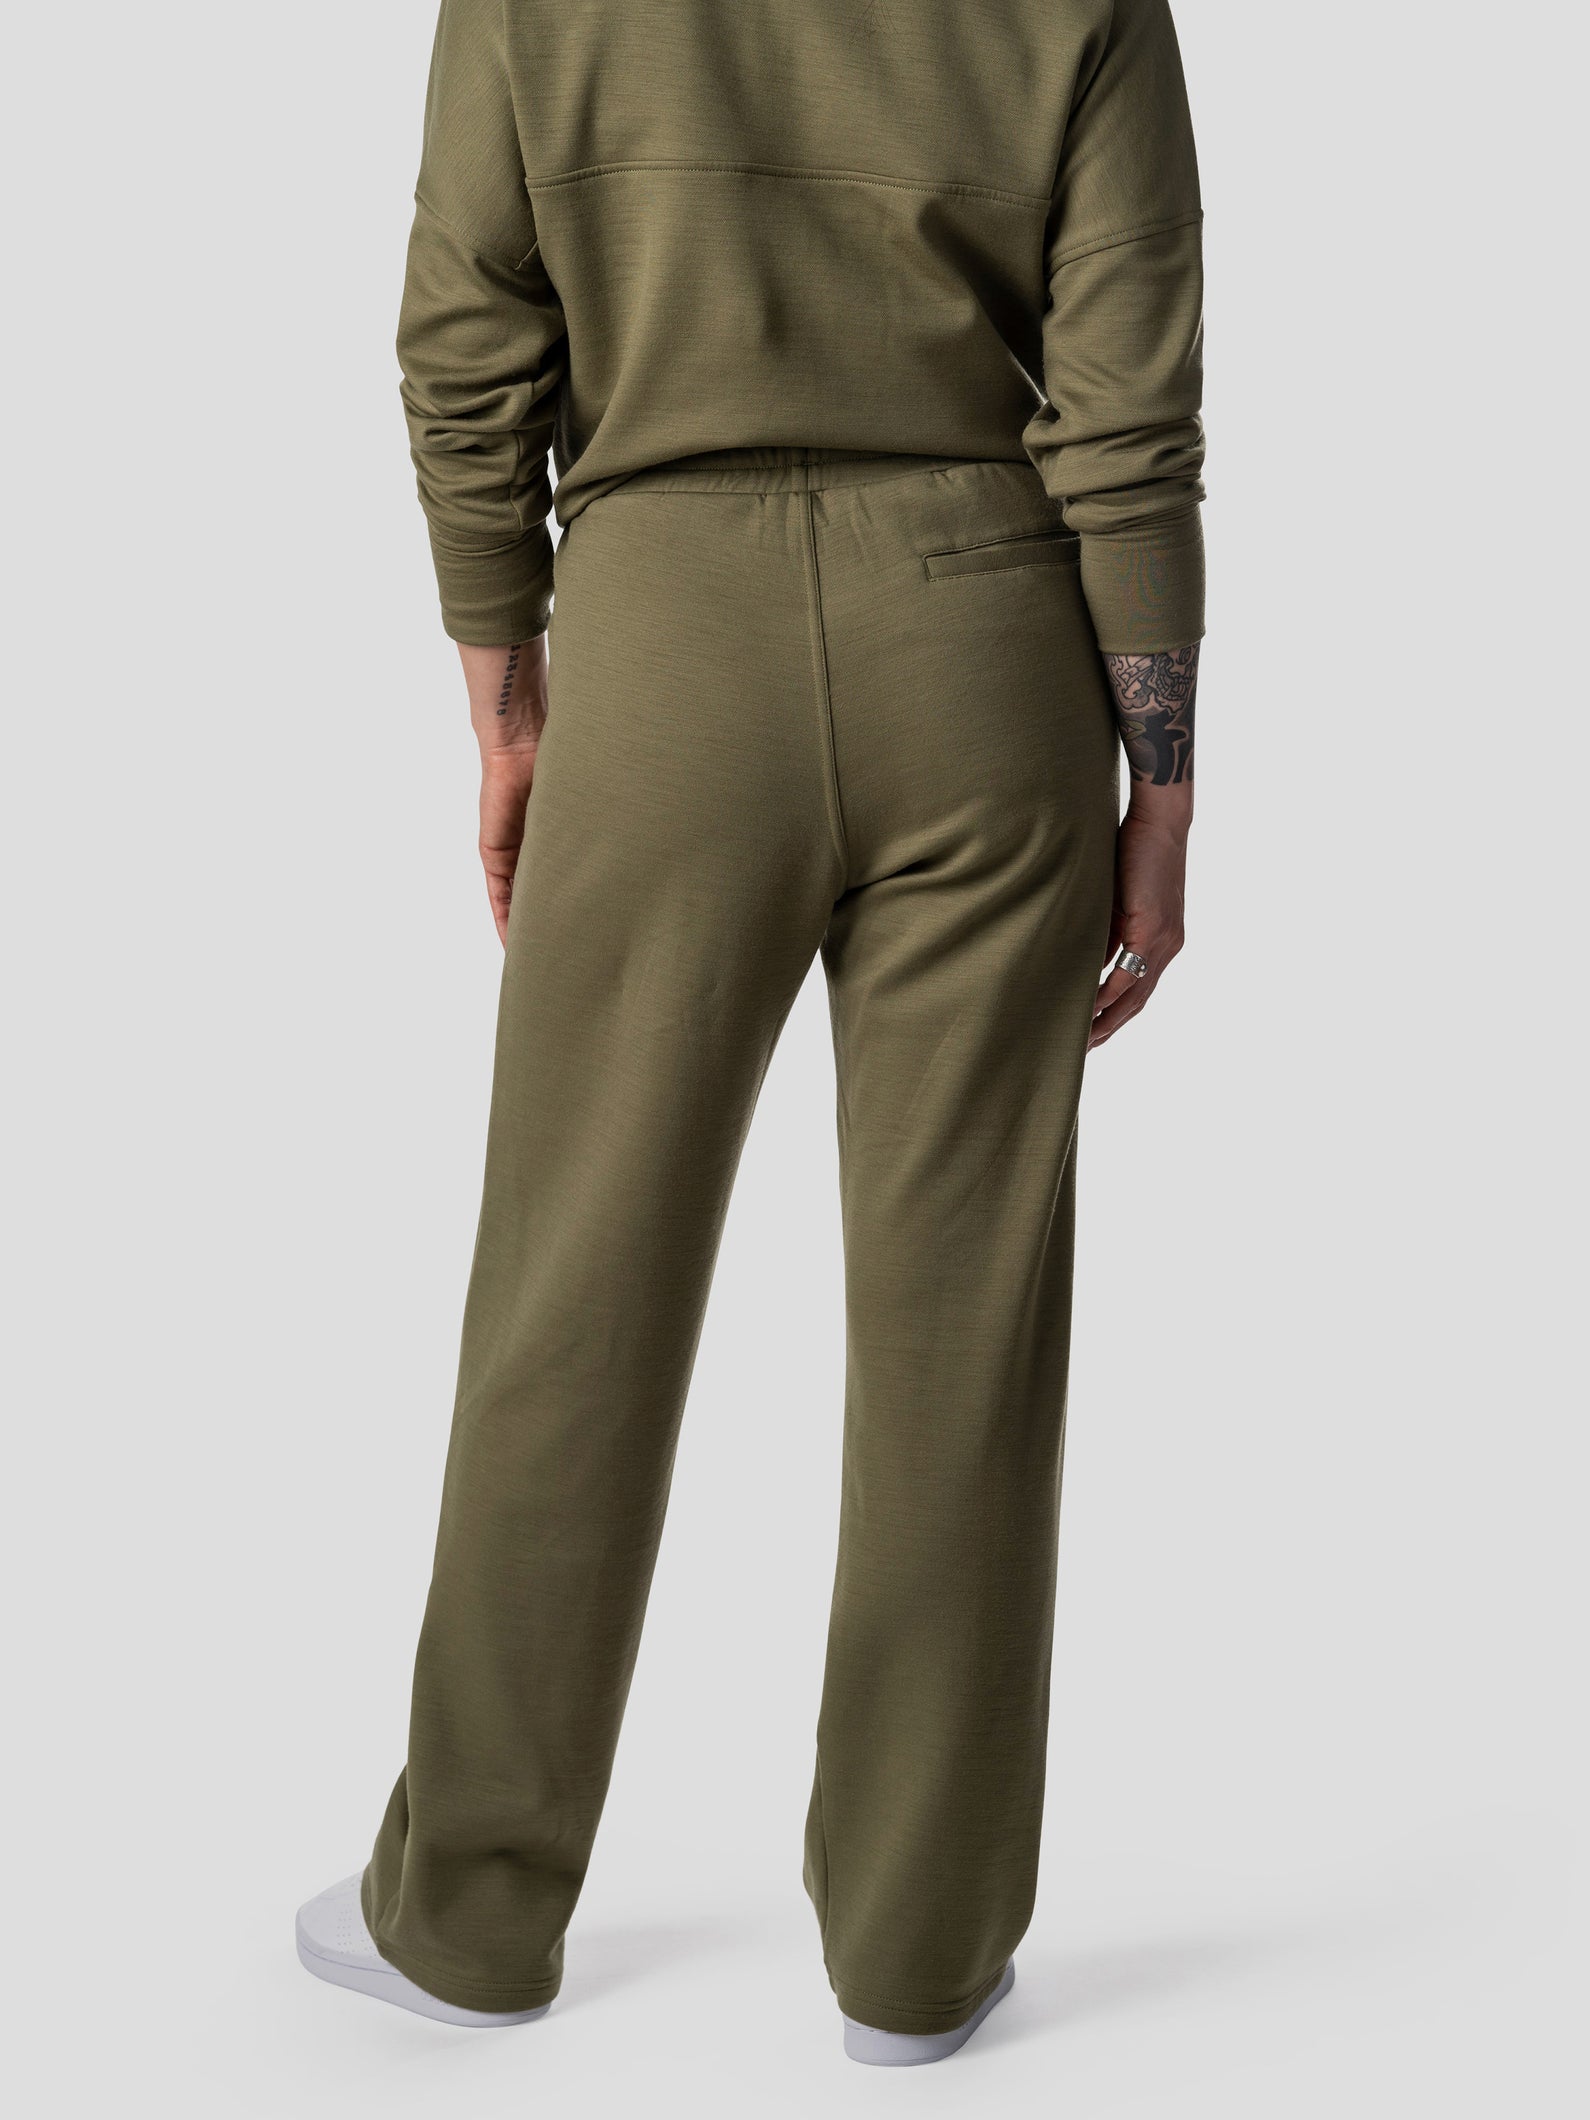 Women's Barton Fleece Pants - Military Green